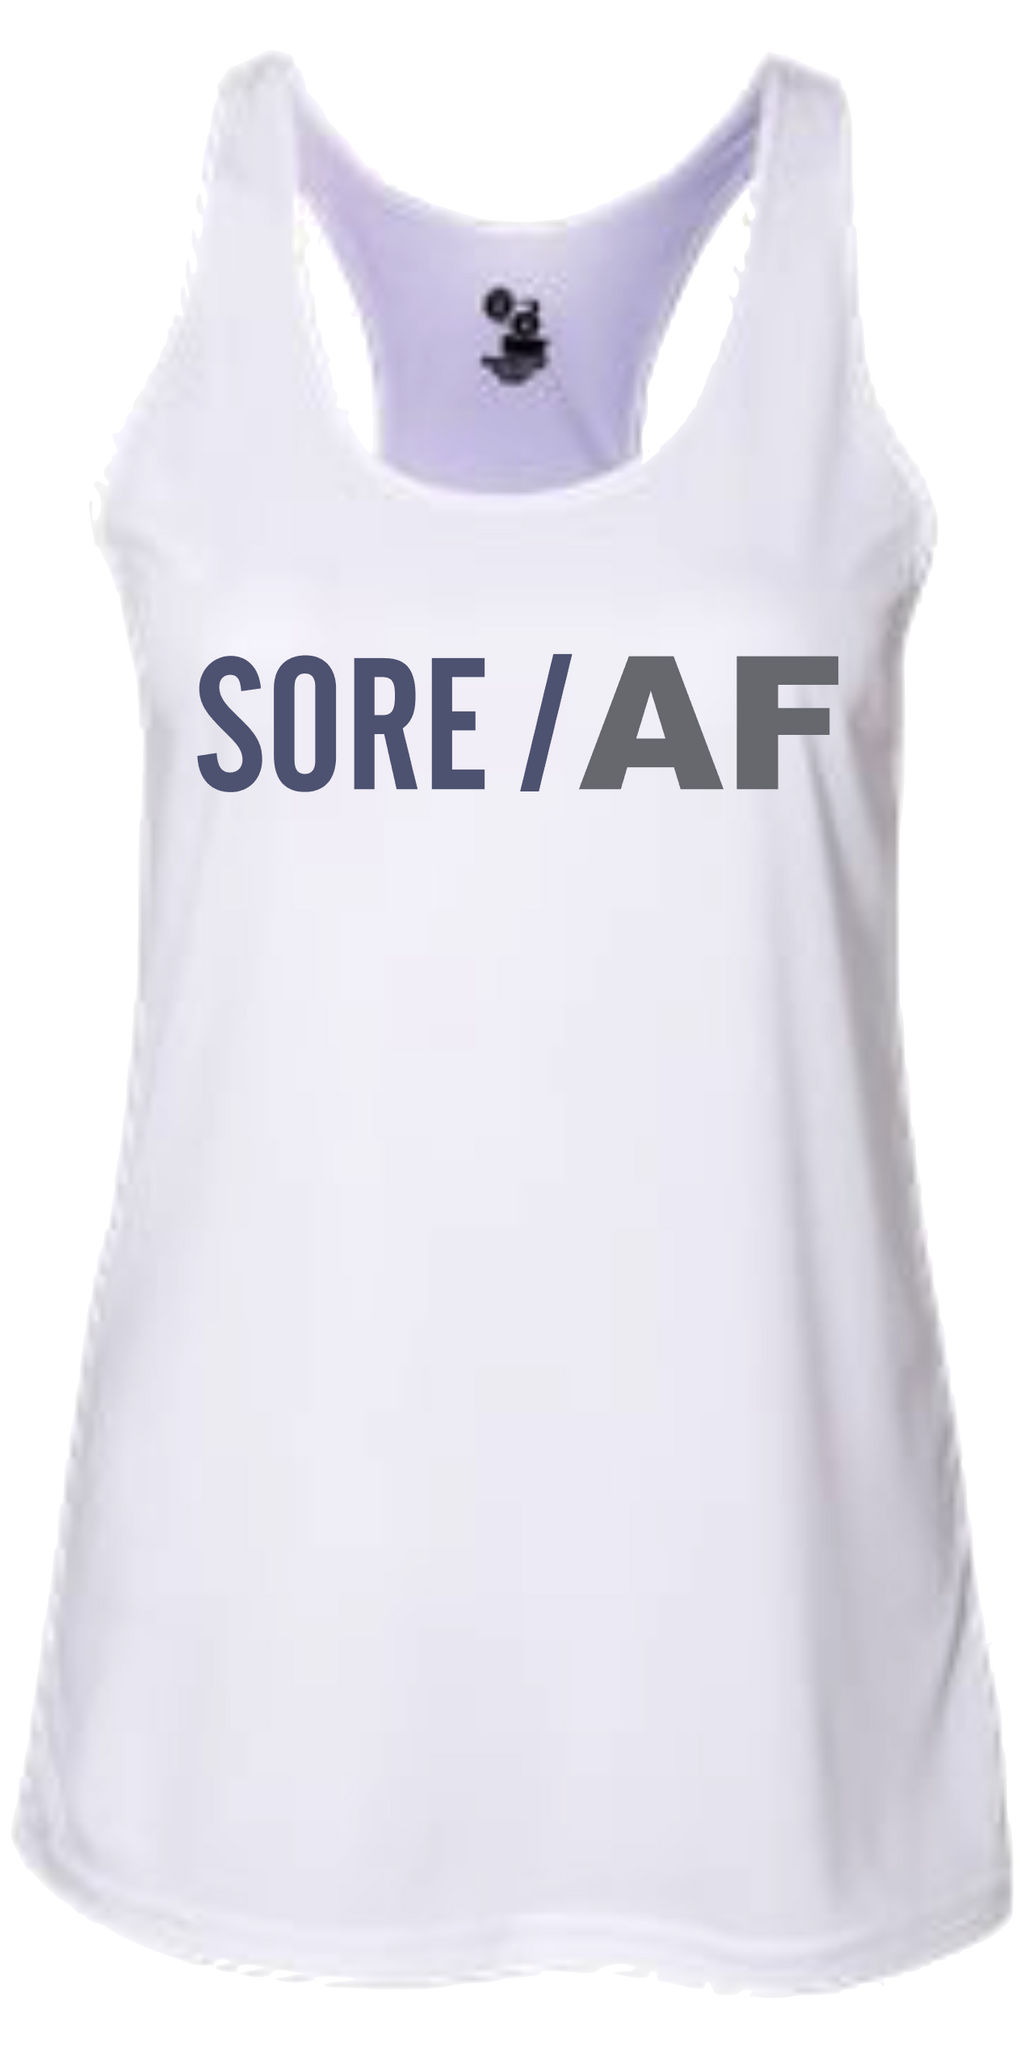 Sore/ AF Tee Shirt White Racerback